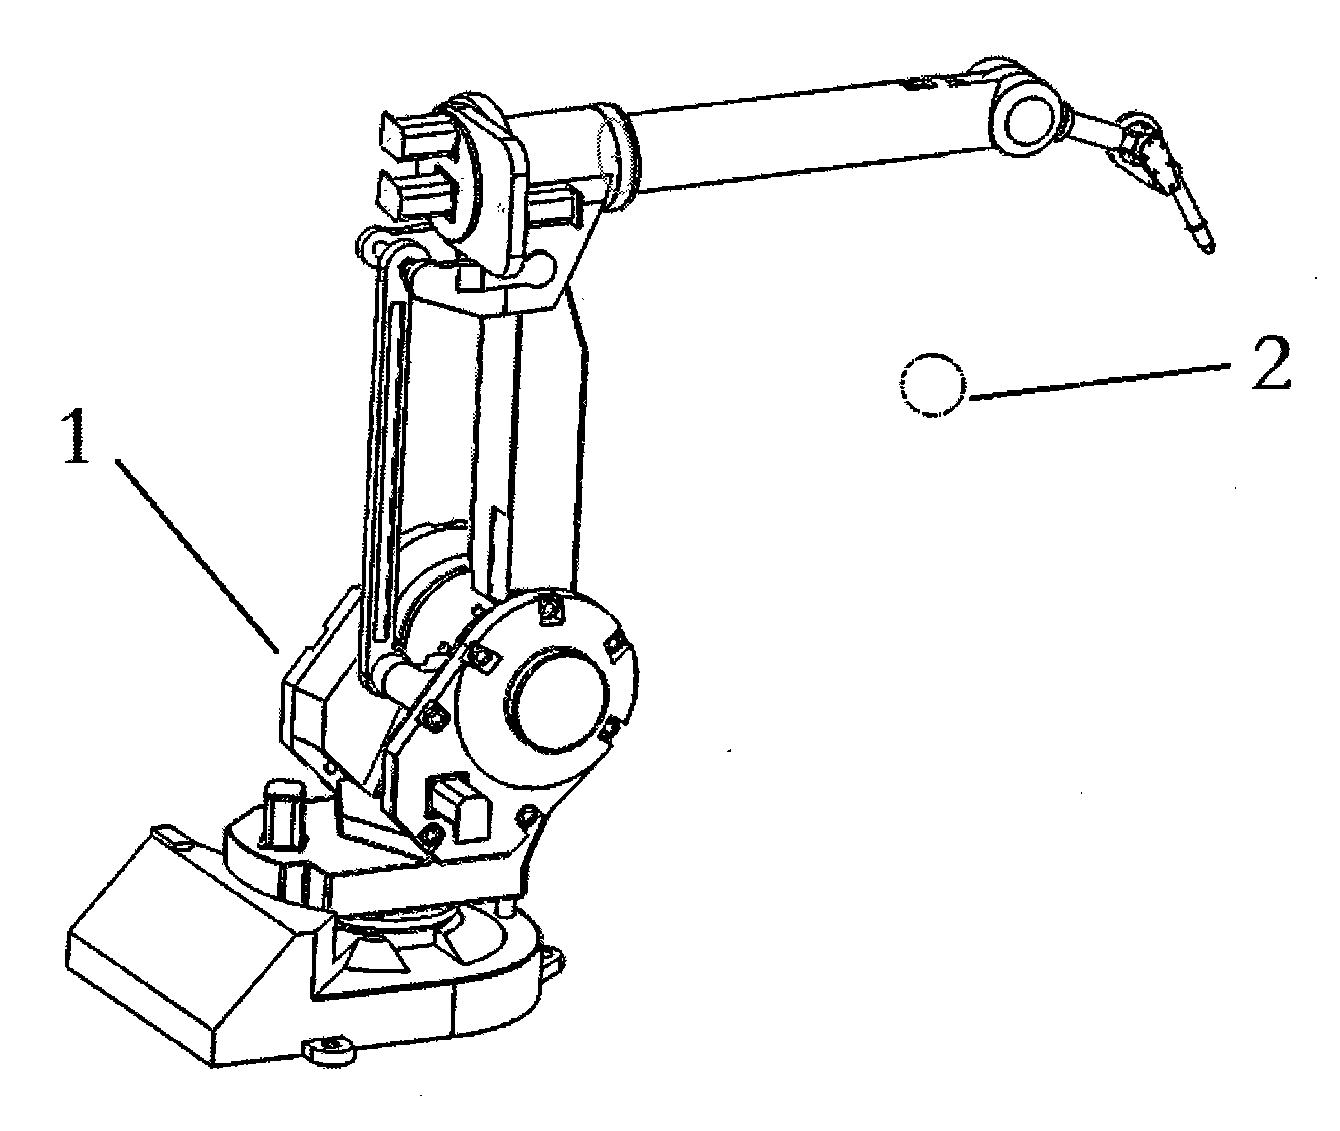 Redundant mechanical arm moving obstacle avoiding algorithm